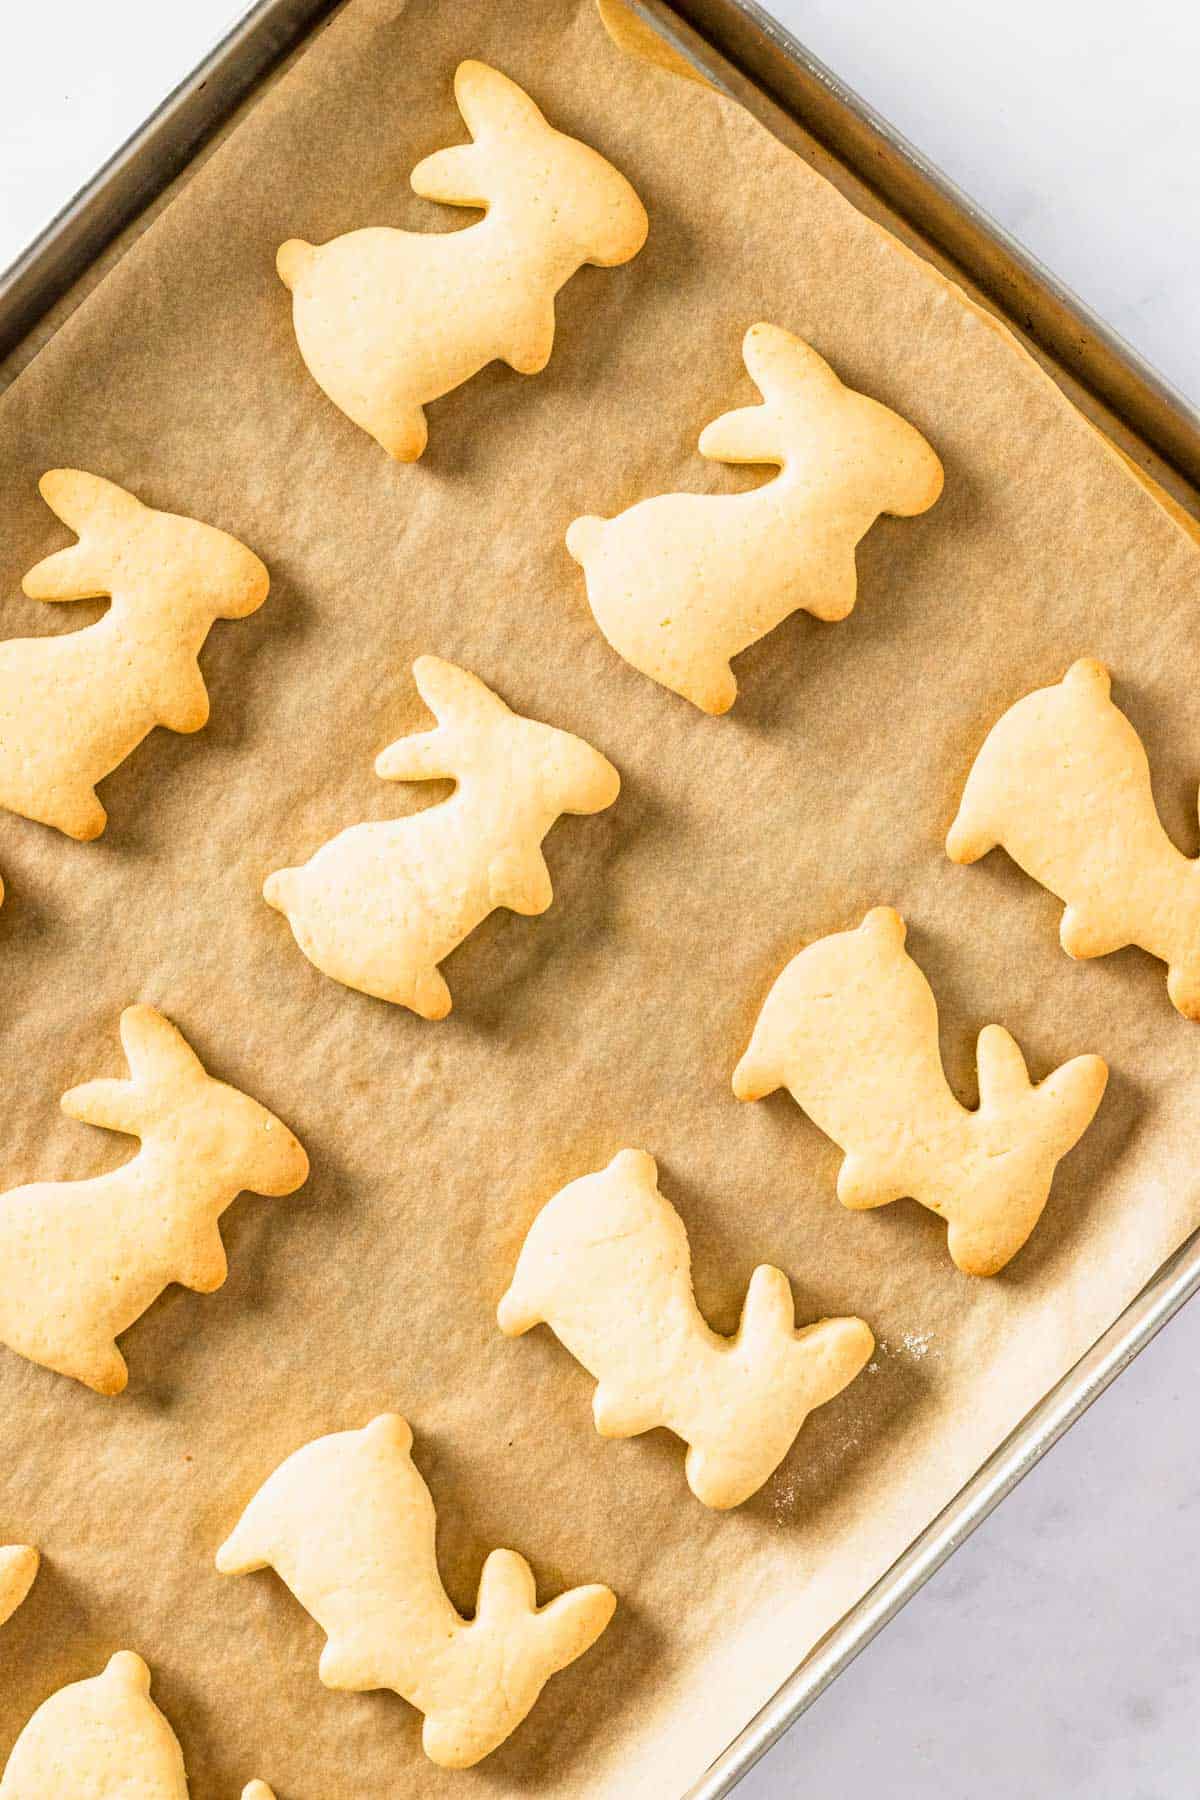 baked bunny sugar cookies on baking sheet